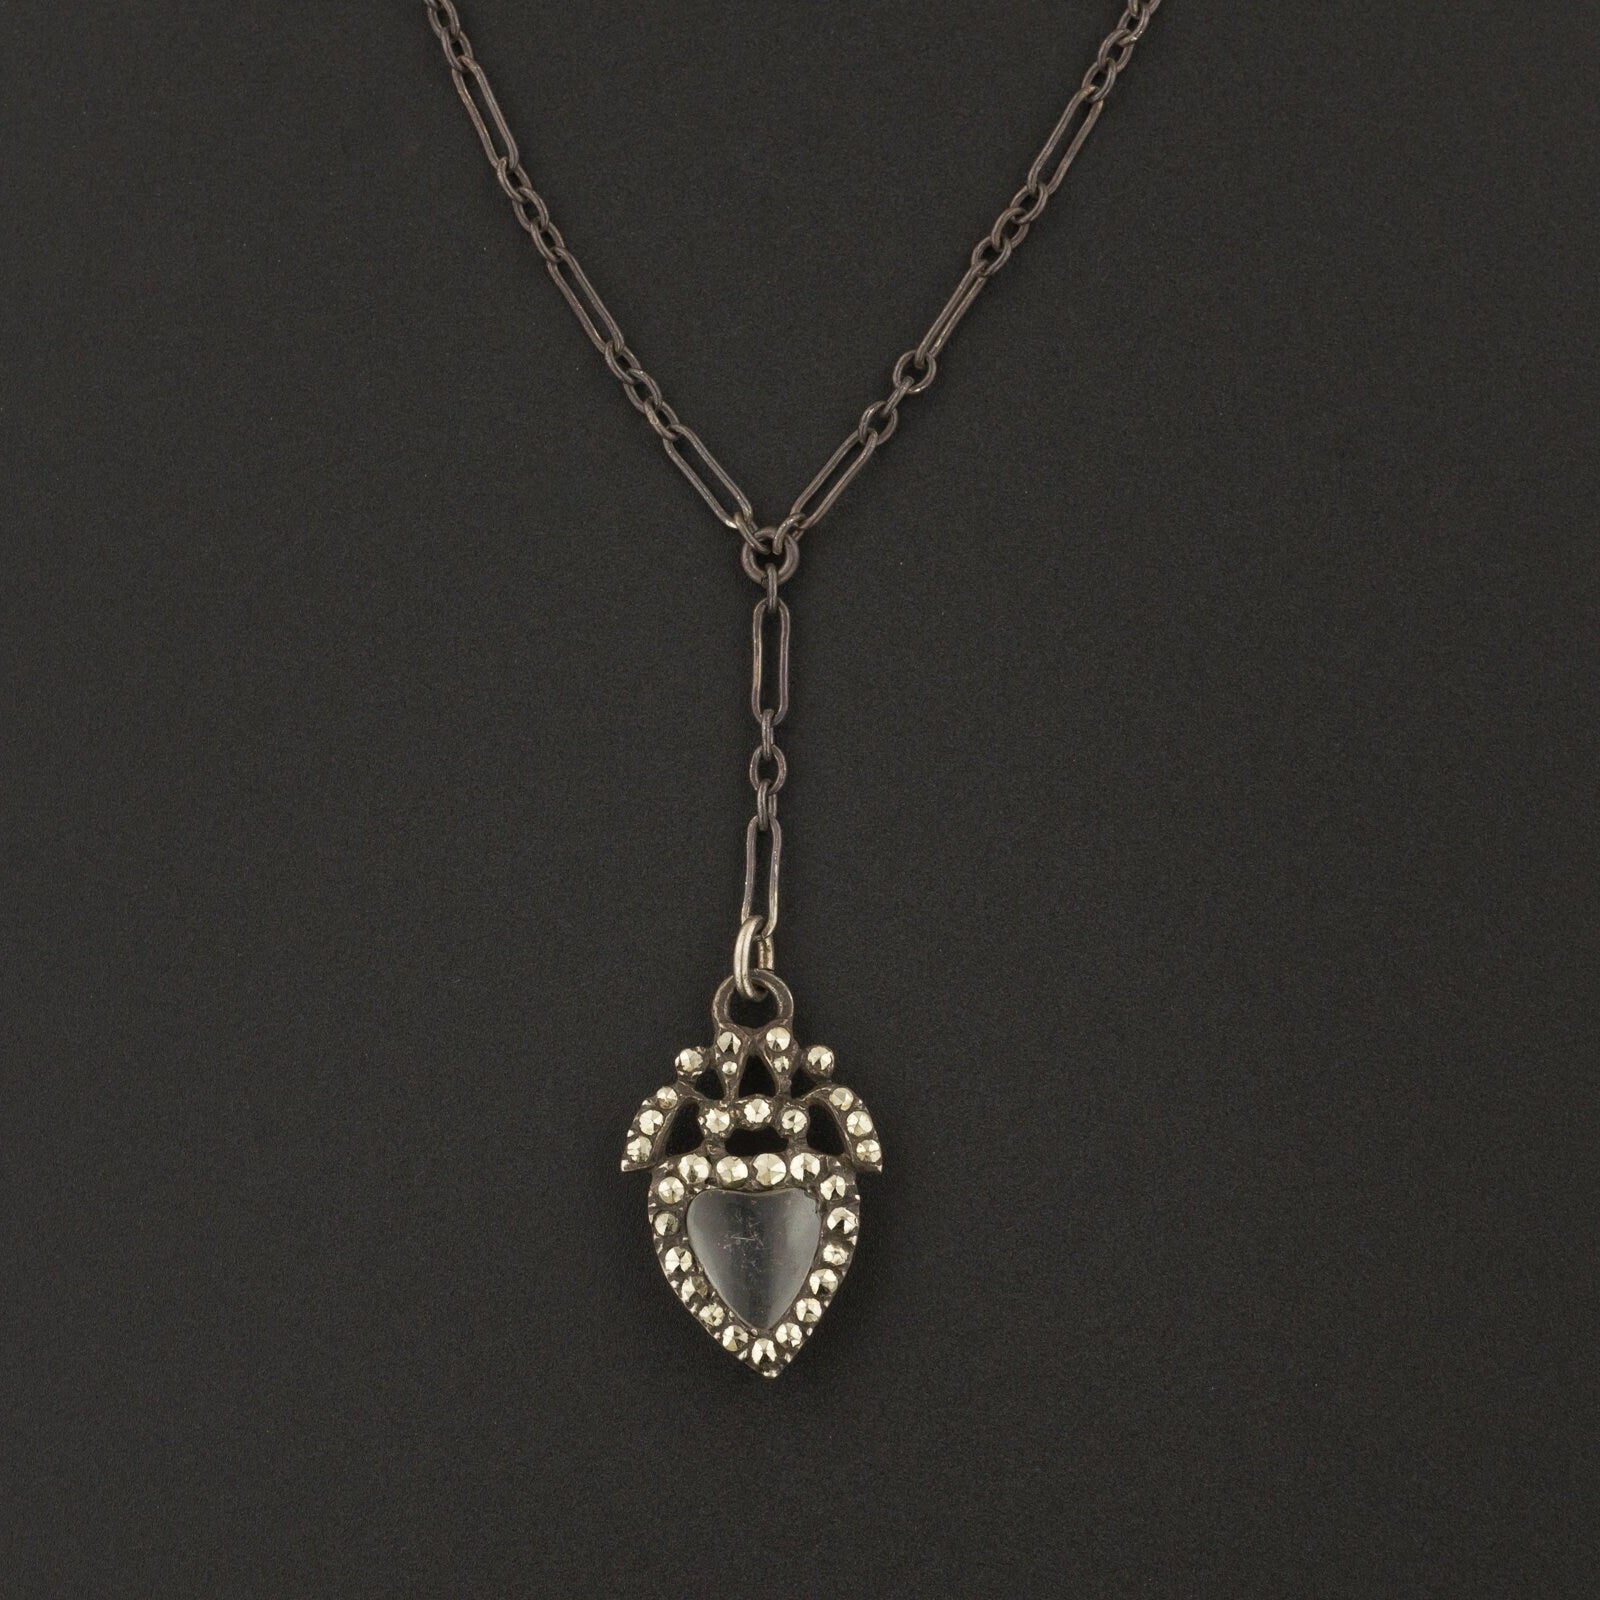 Silver & Marcasite Heart Necklace | Antique Heart Necklace 